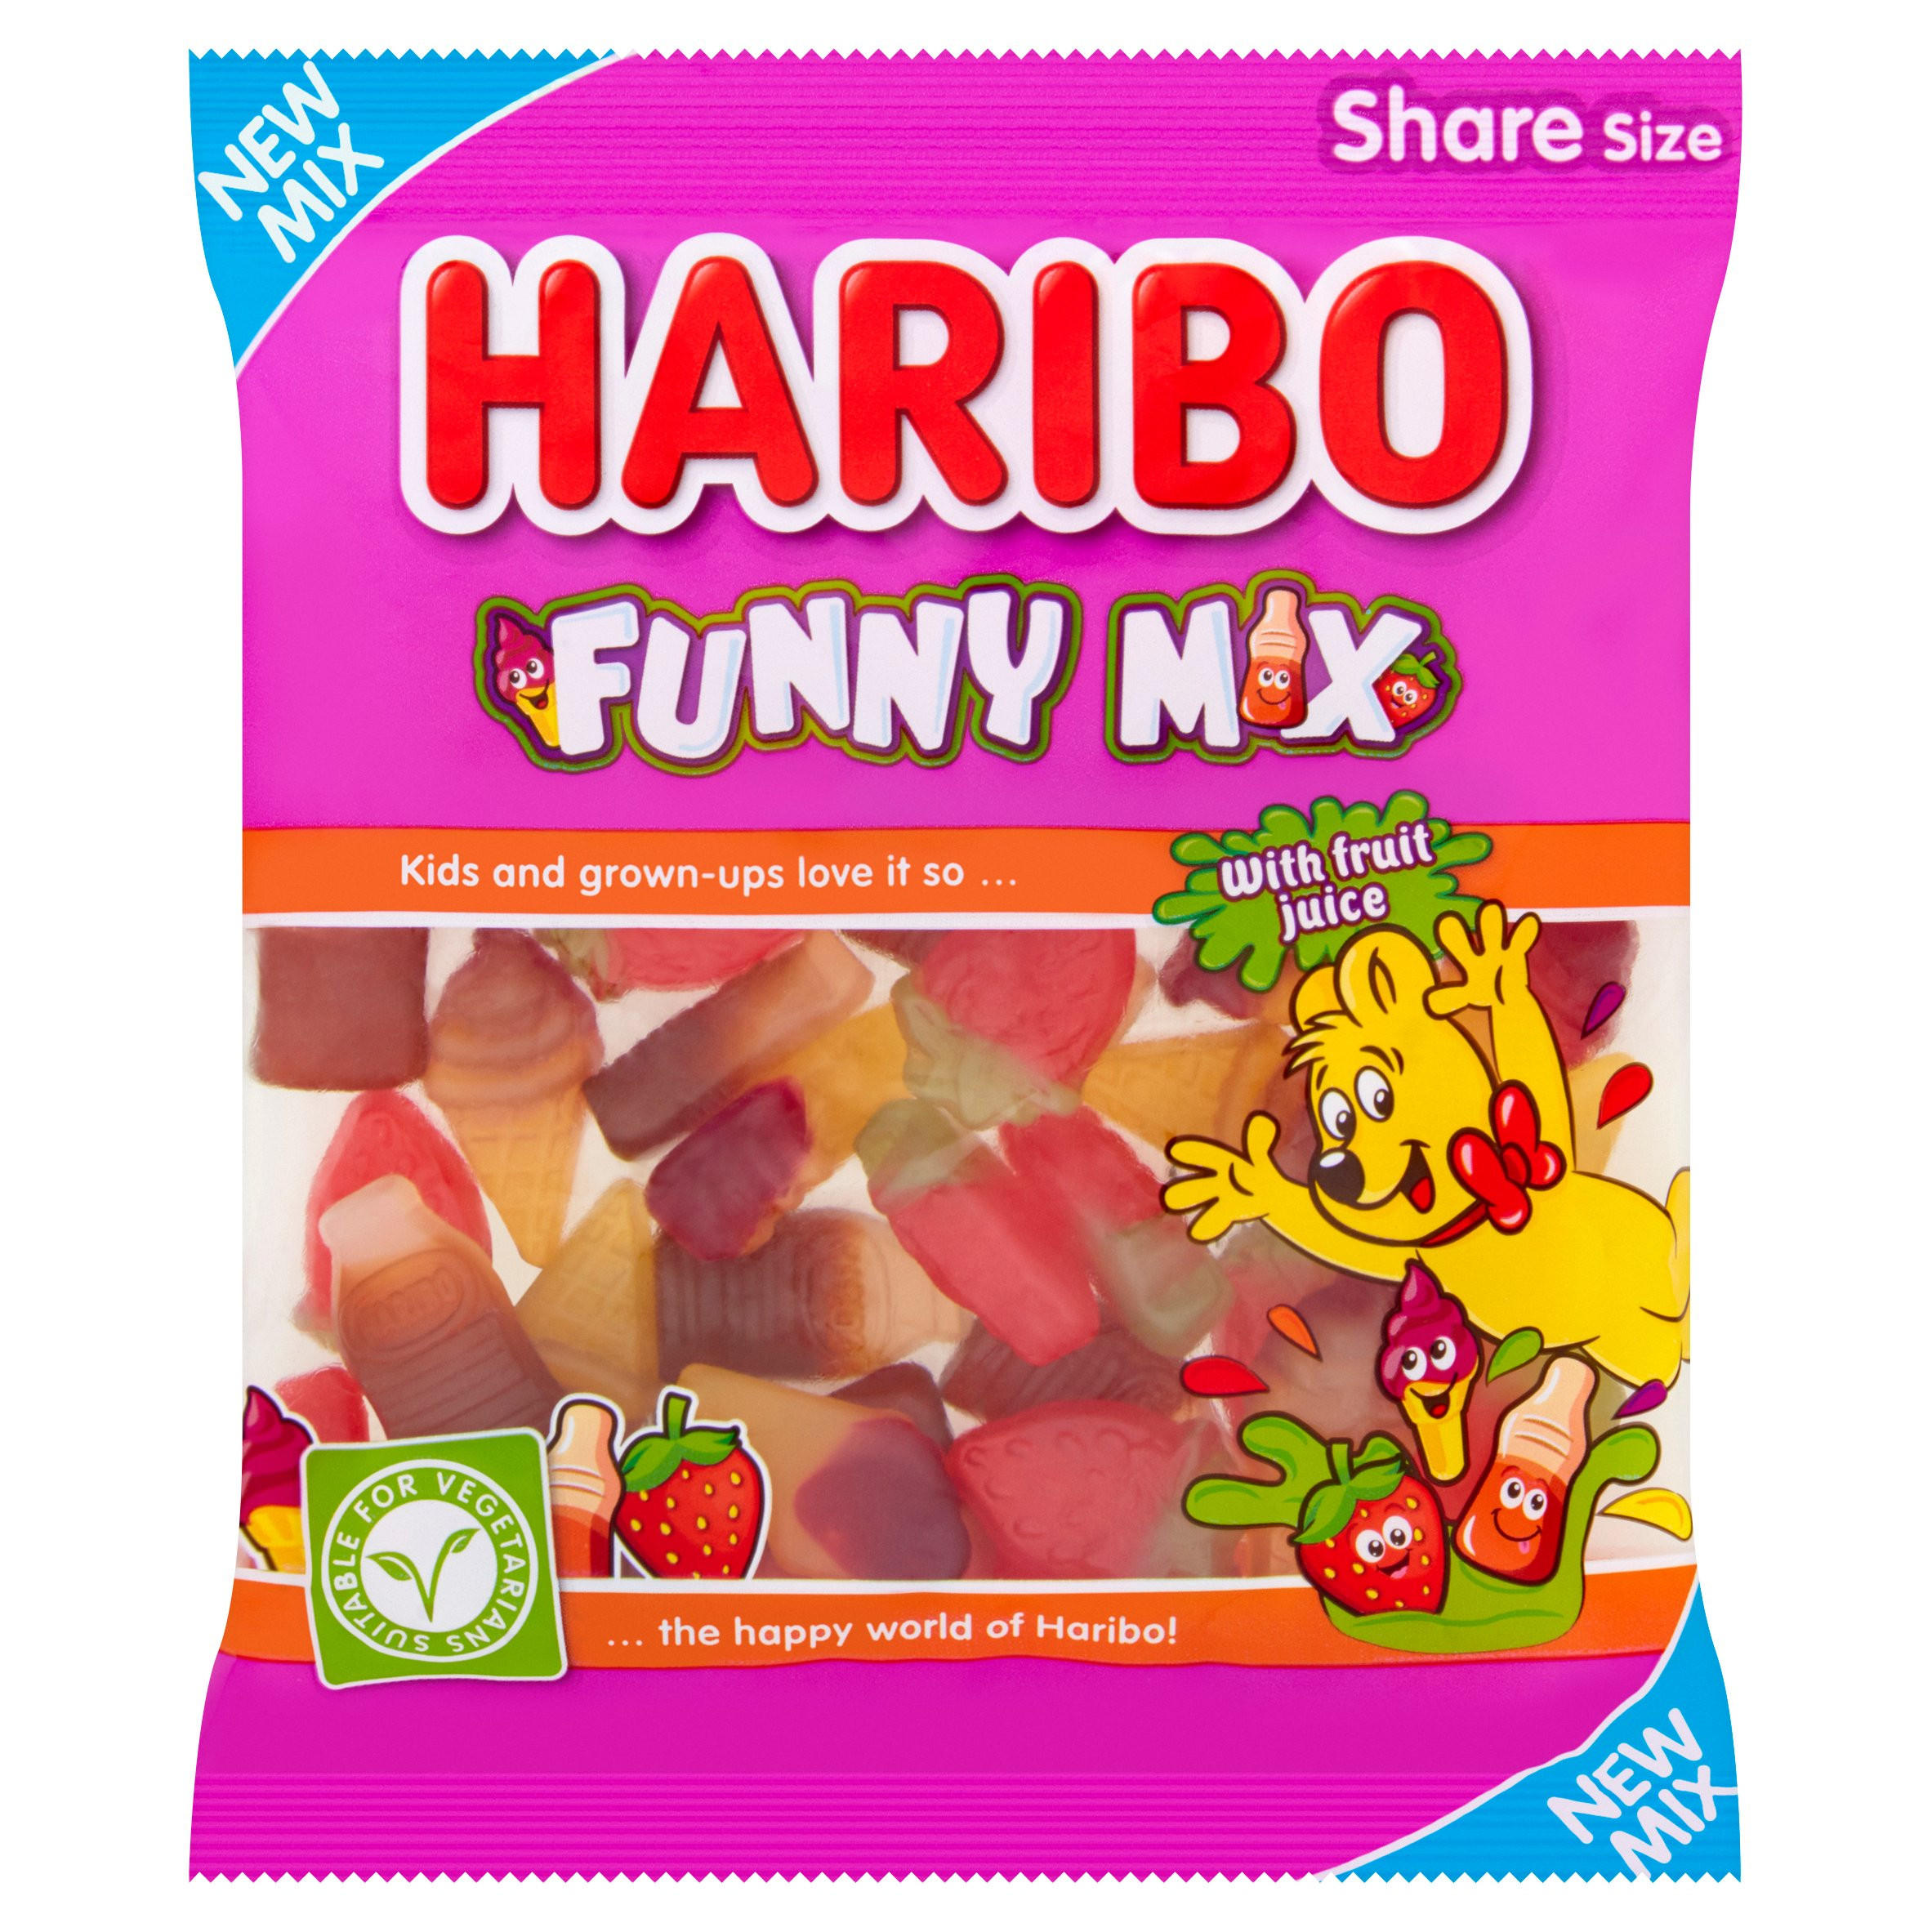 HARIBO Funny Mix Bag 190g | Sharing Bags & Tubs | Iceland Foods